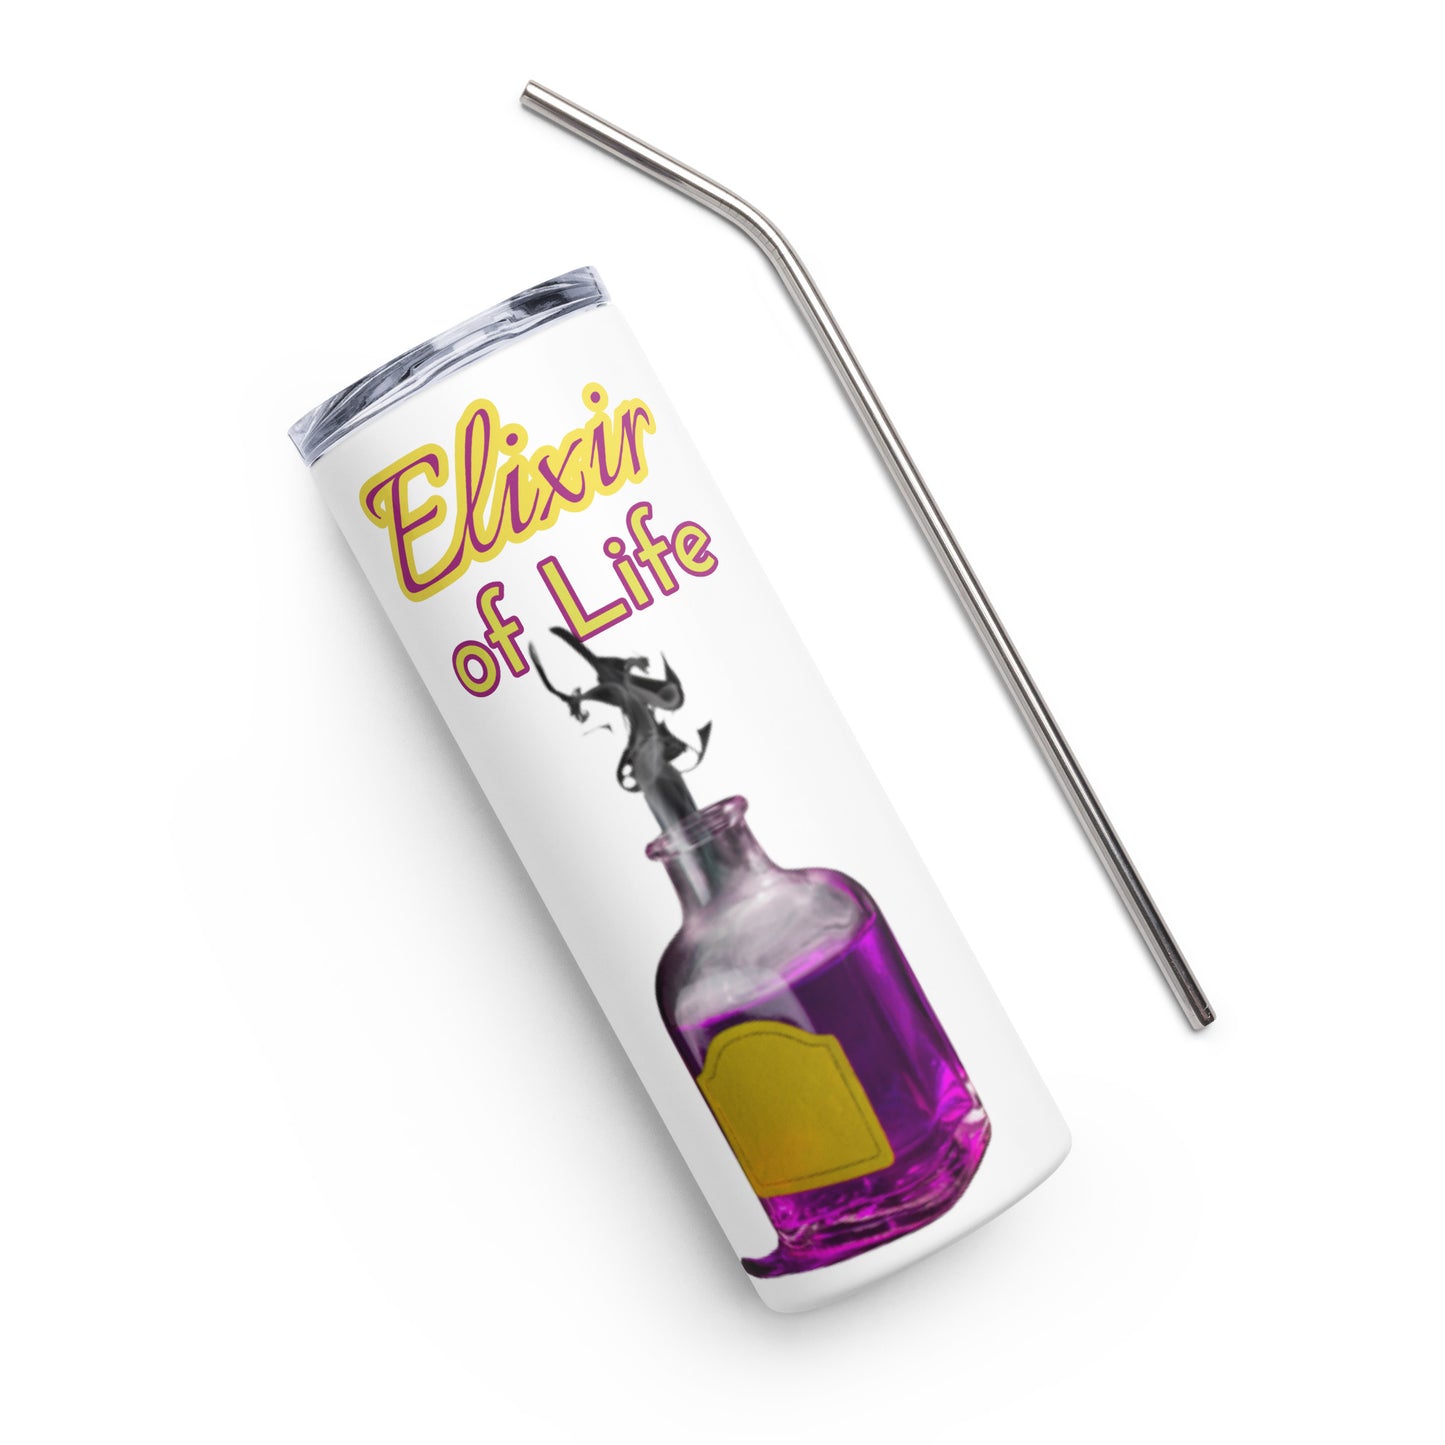 Elixir of Life Stainless steel tumbler